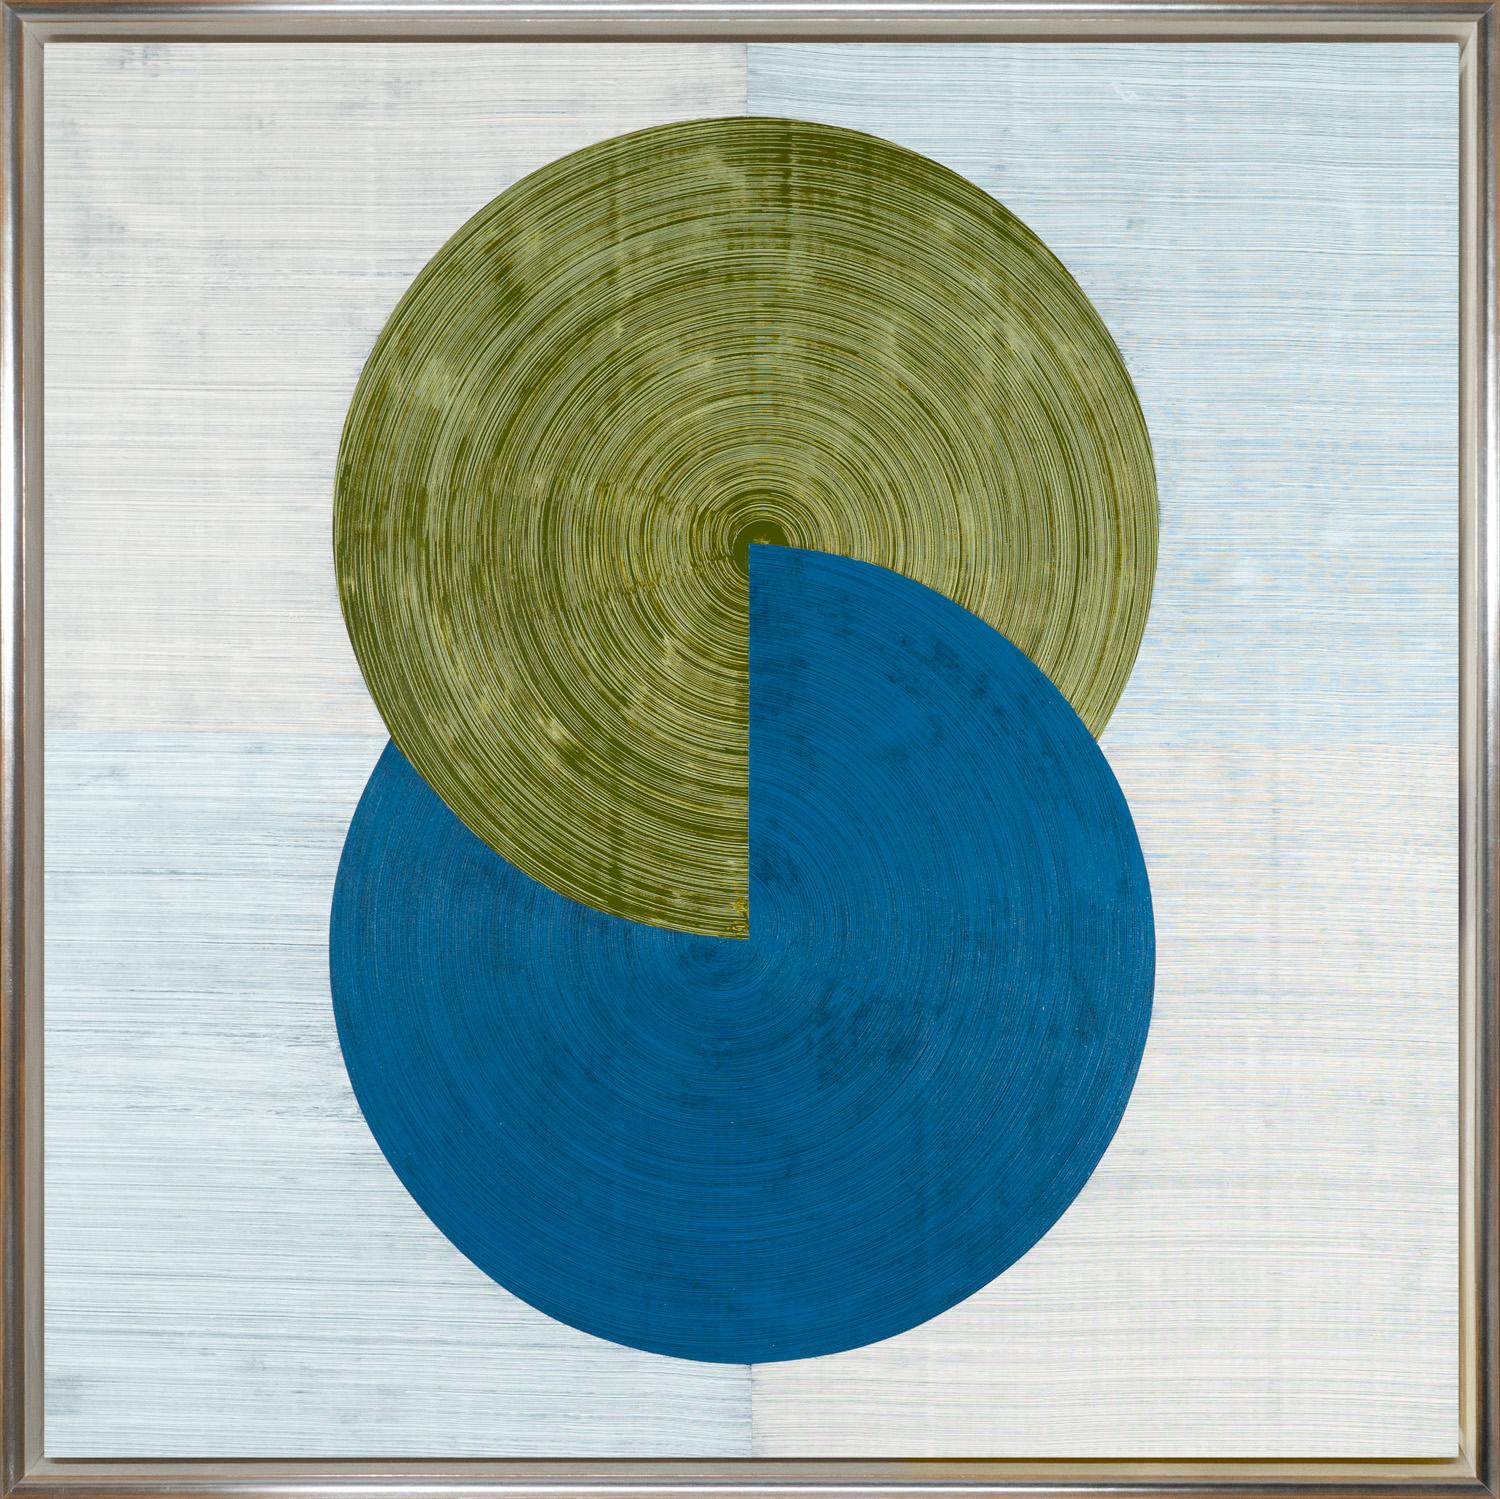 David Skillicorn Abstract Painting - "Harmonia 32-1" Contemporary Abstract Framed Acrylic on Canvas Painting